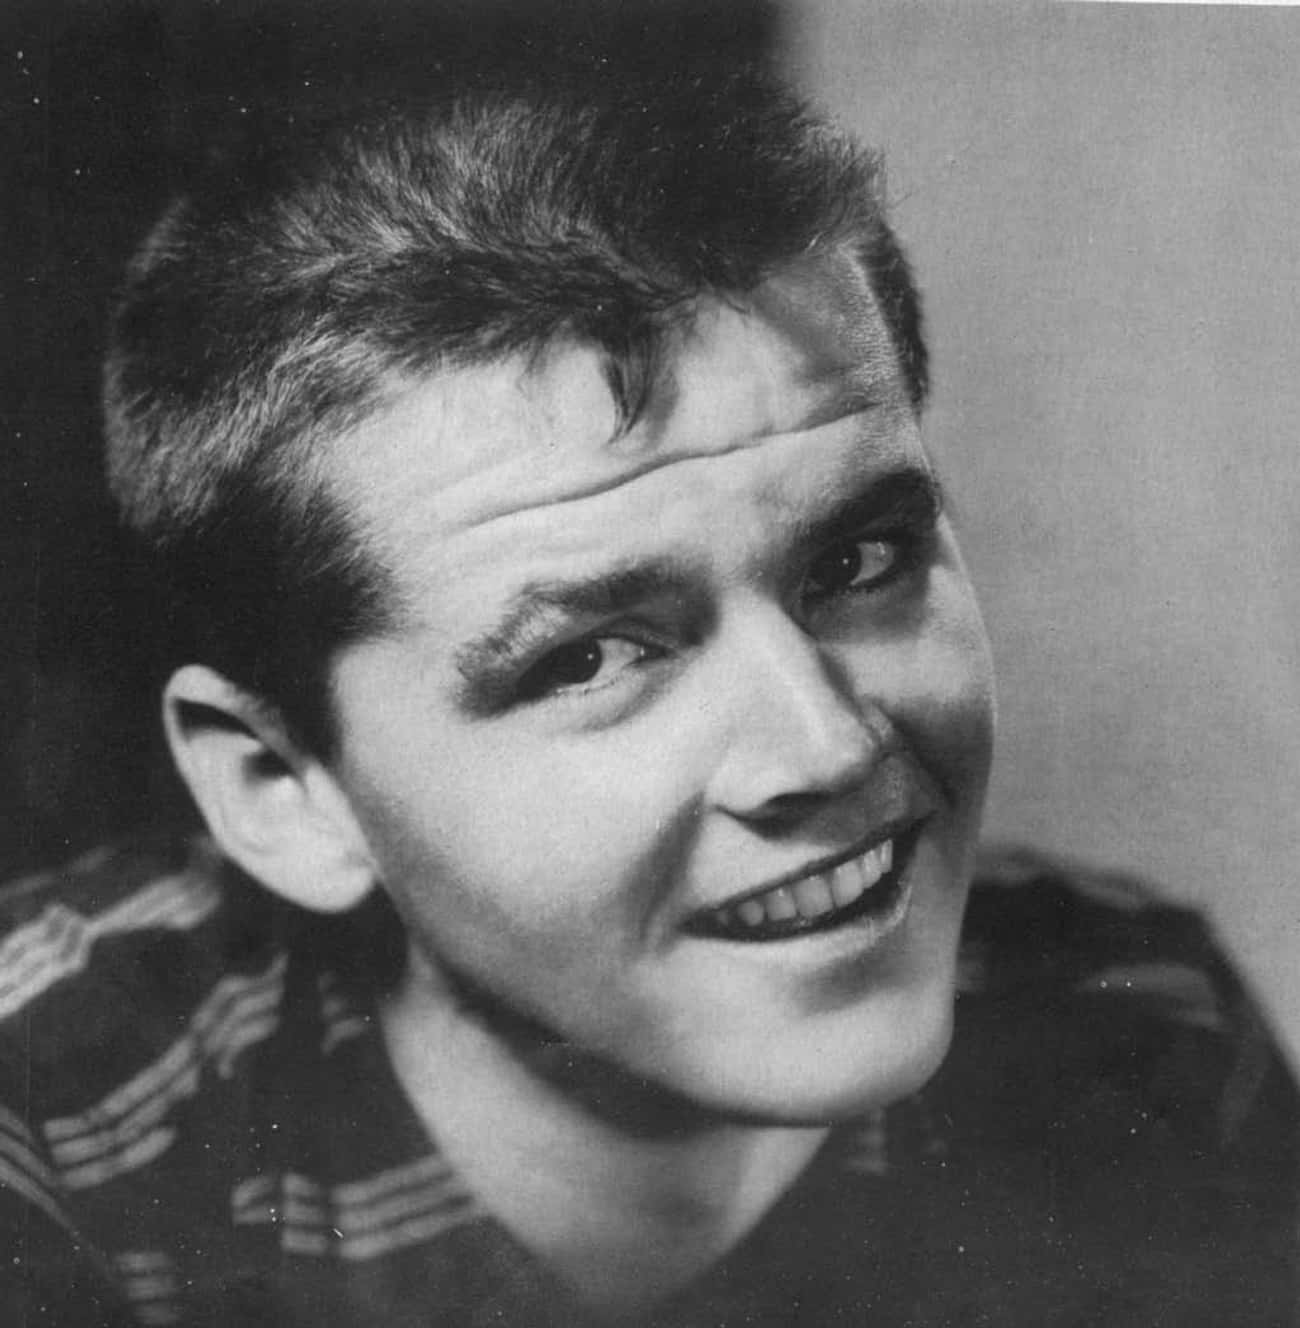 Young Jack Nicholson in High School